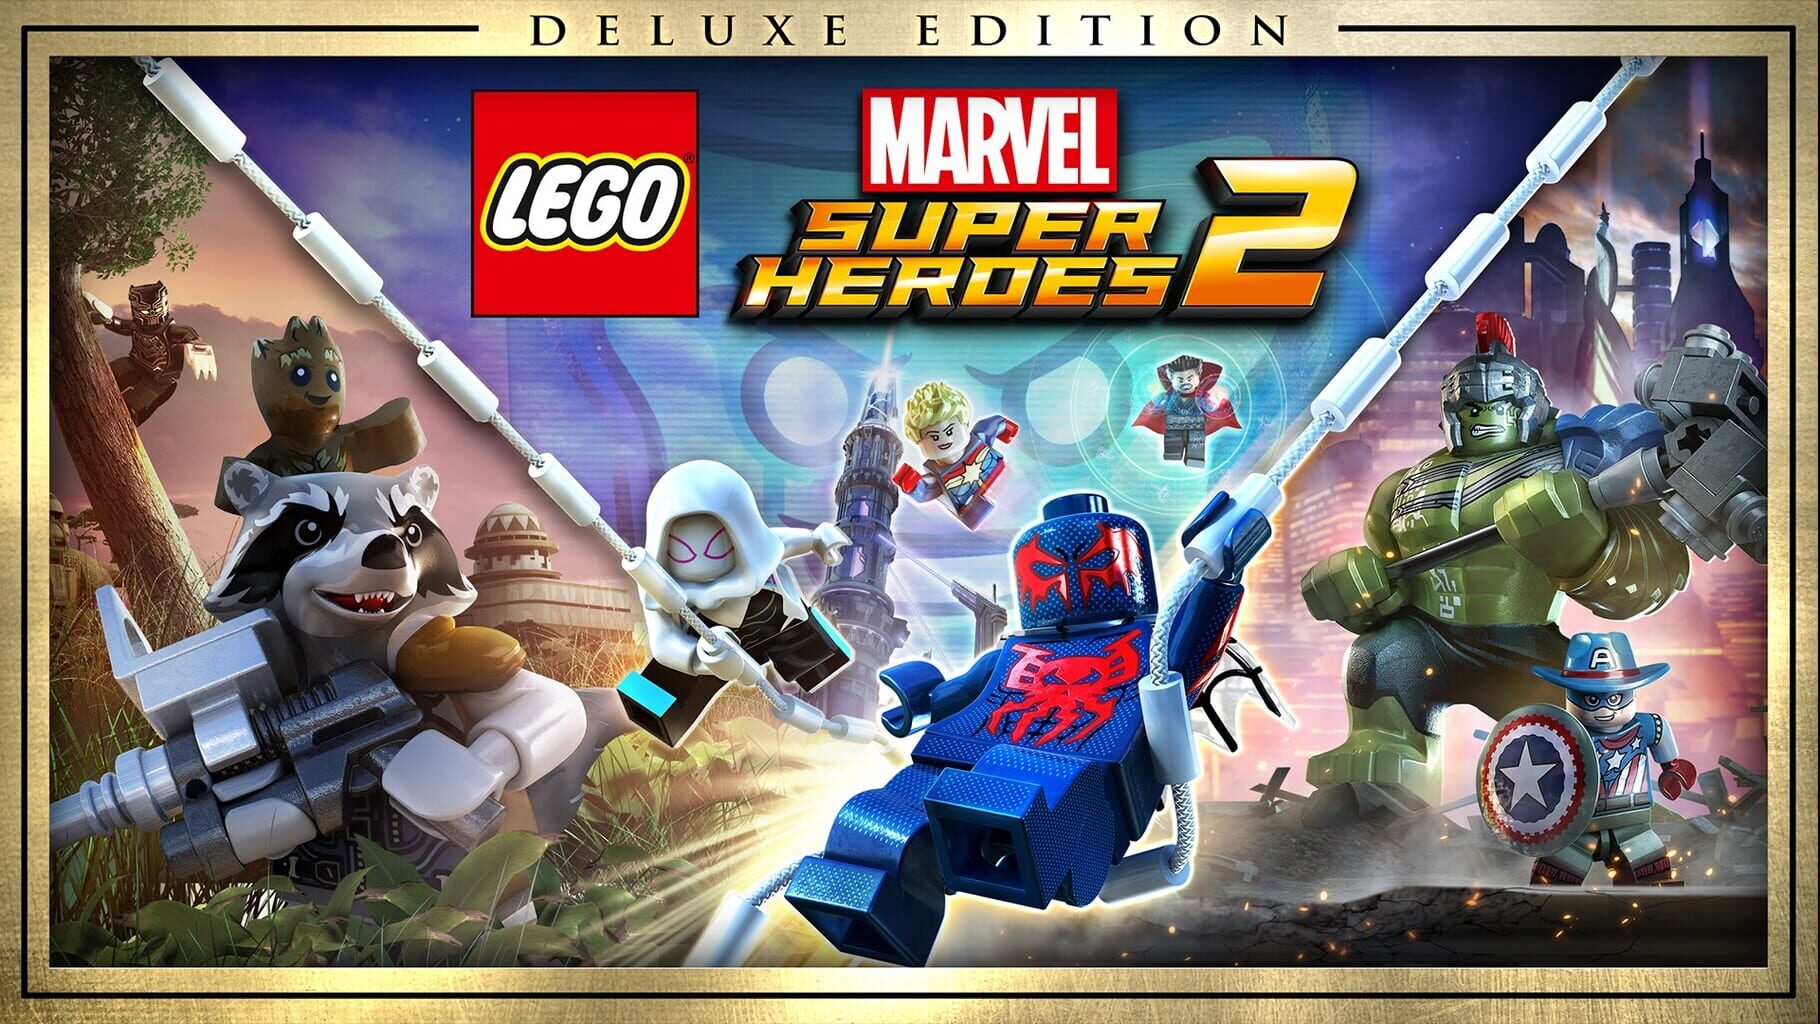 Arte - LEGO Marvel Super Heroes 2: Deluxe Edition